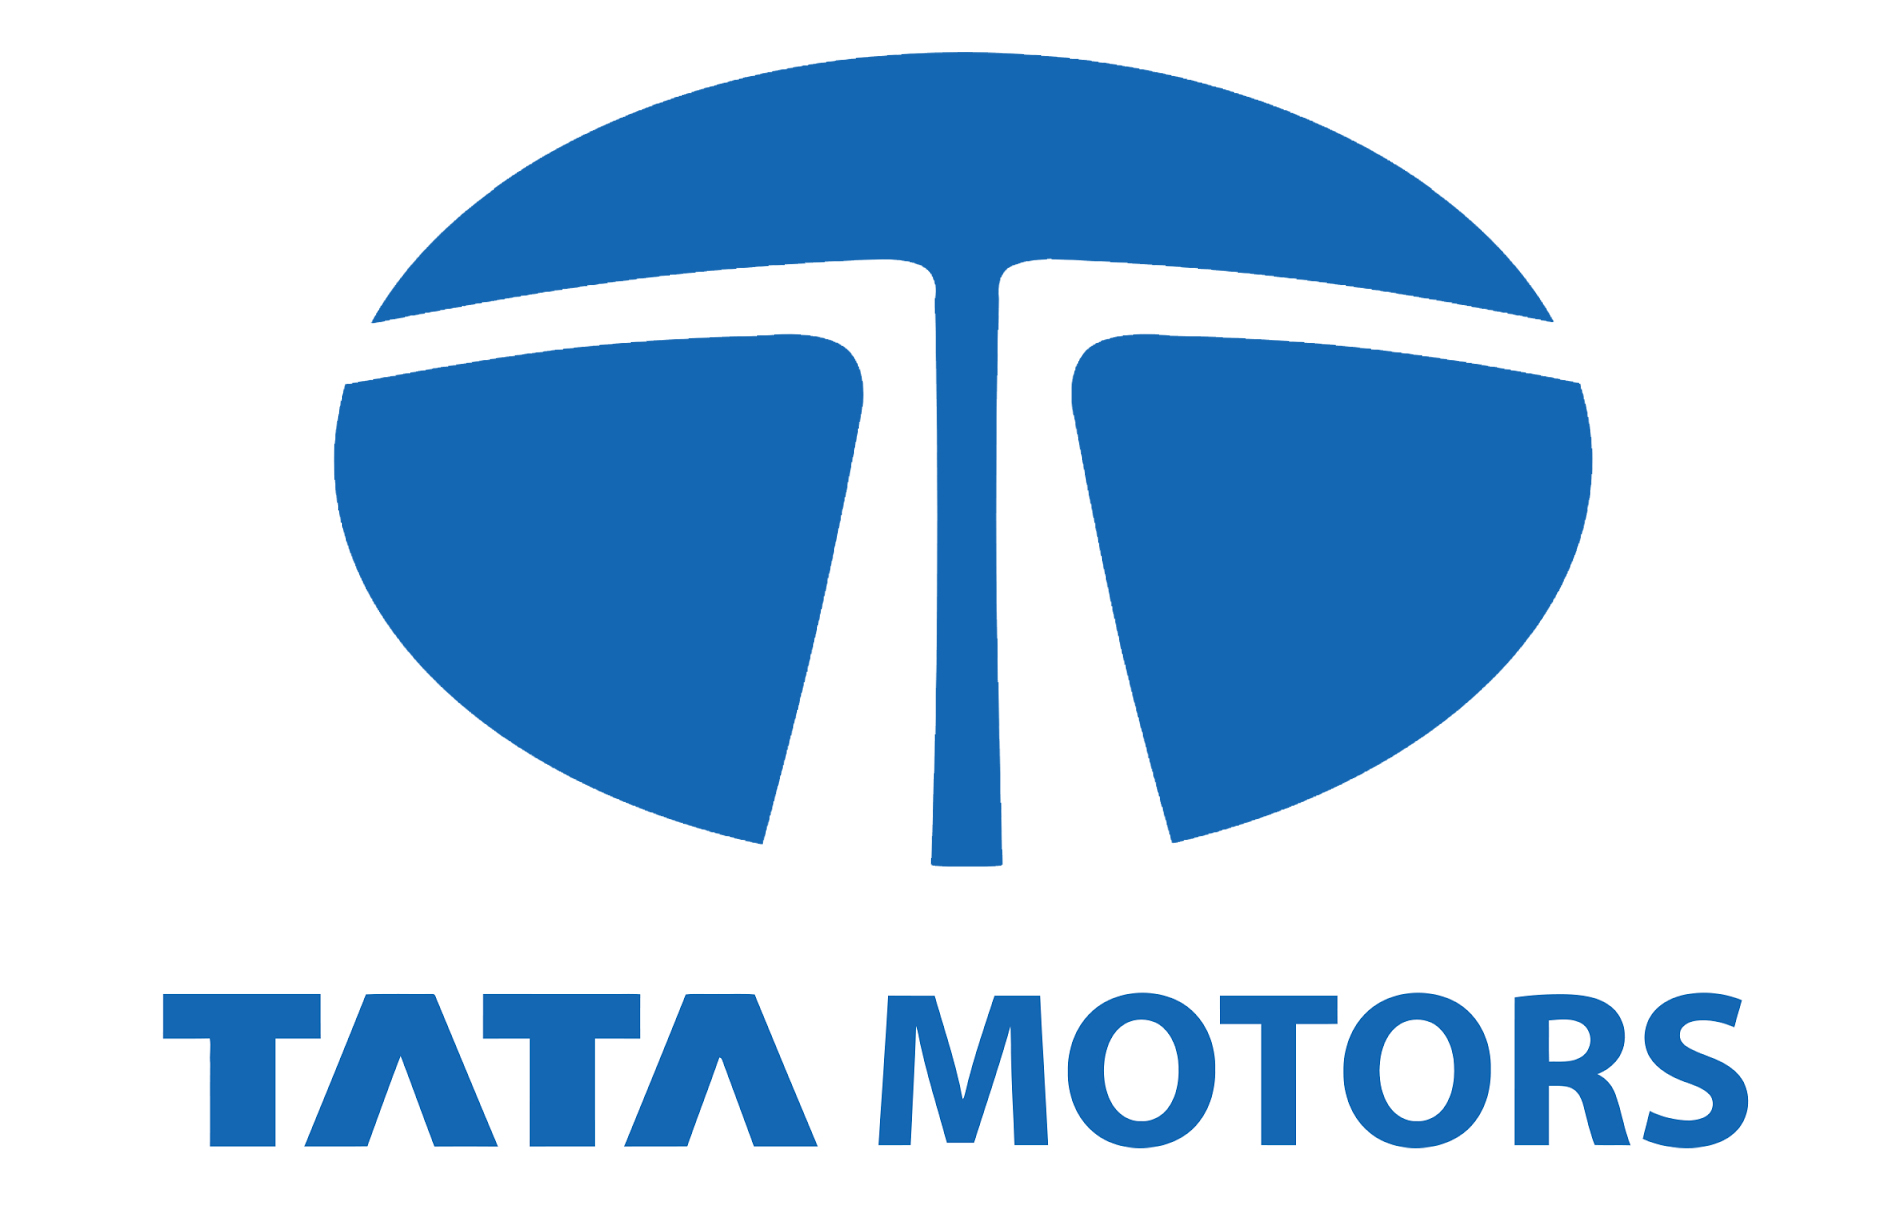 TaTa Motors Cars Showroom Frontier Motocorp Shahdol - Logo